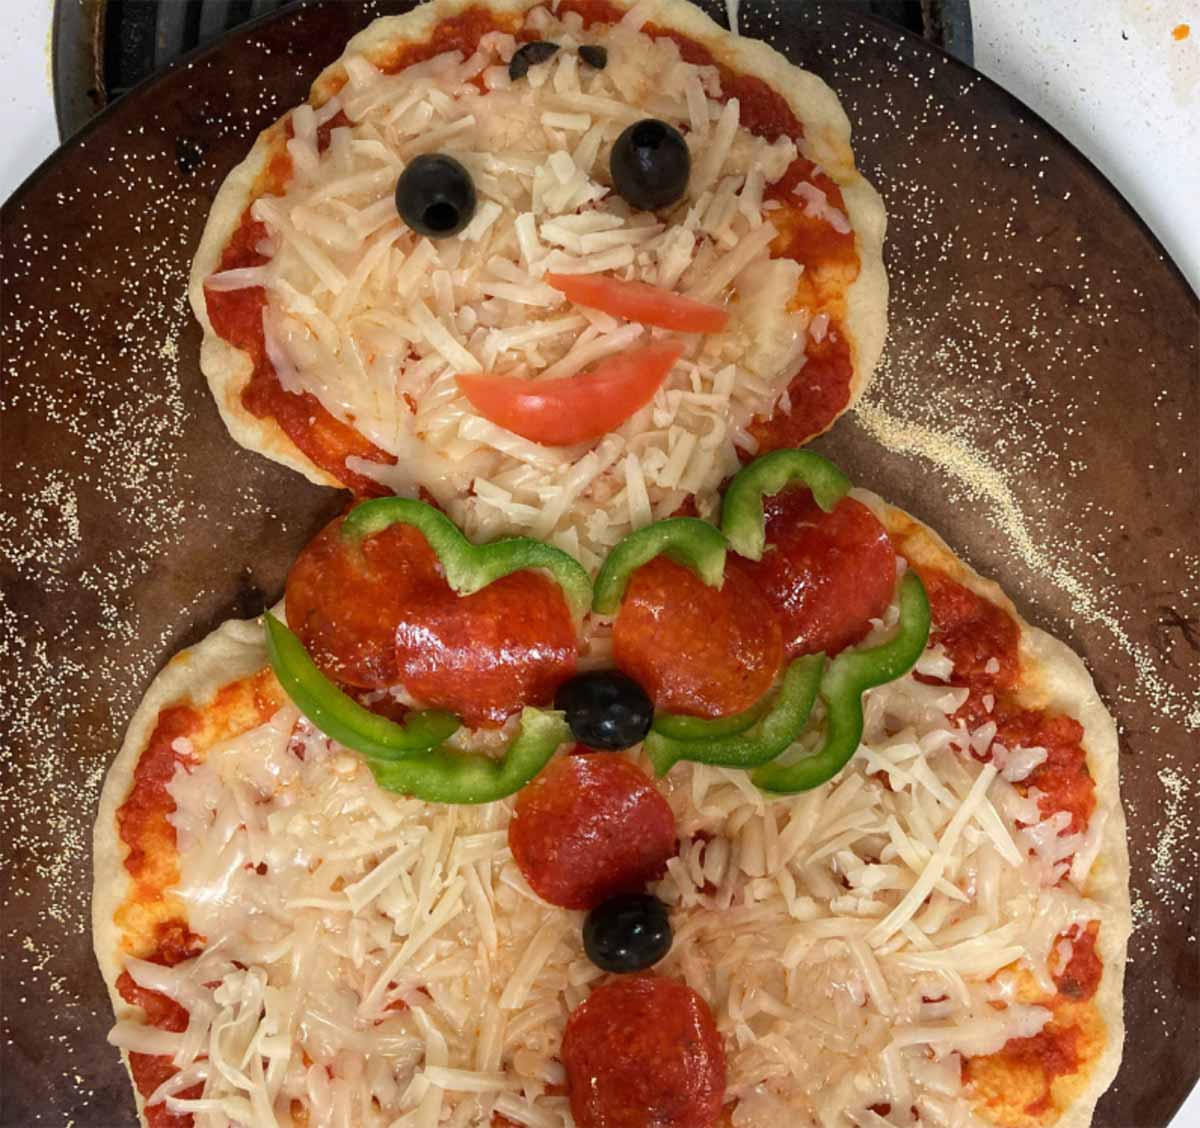 snowman shaped pizza